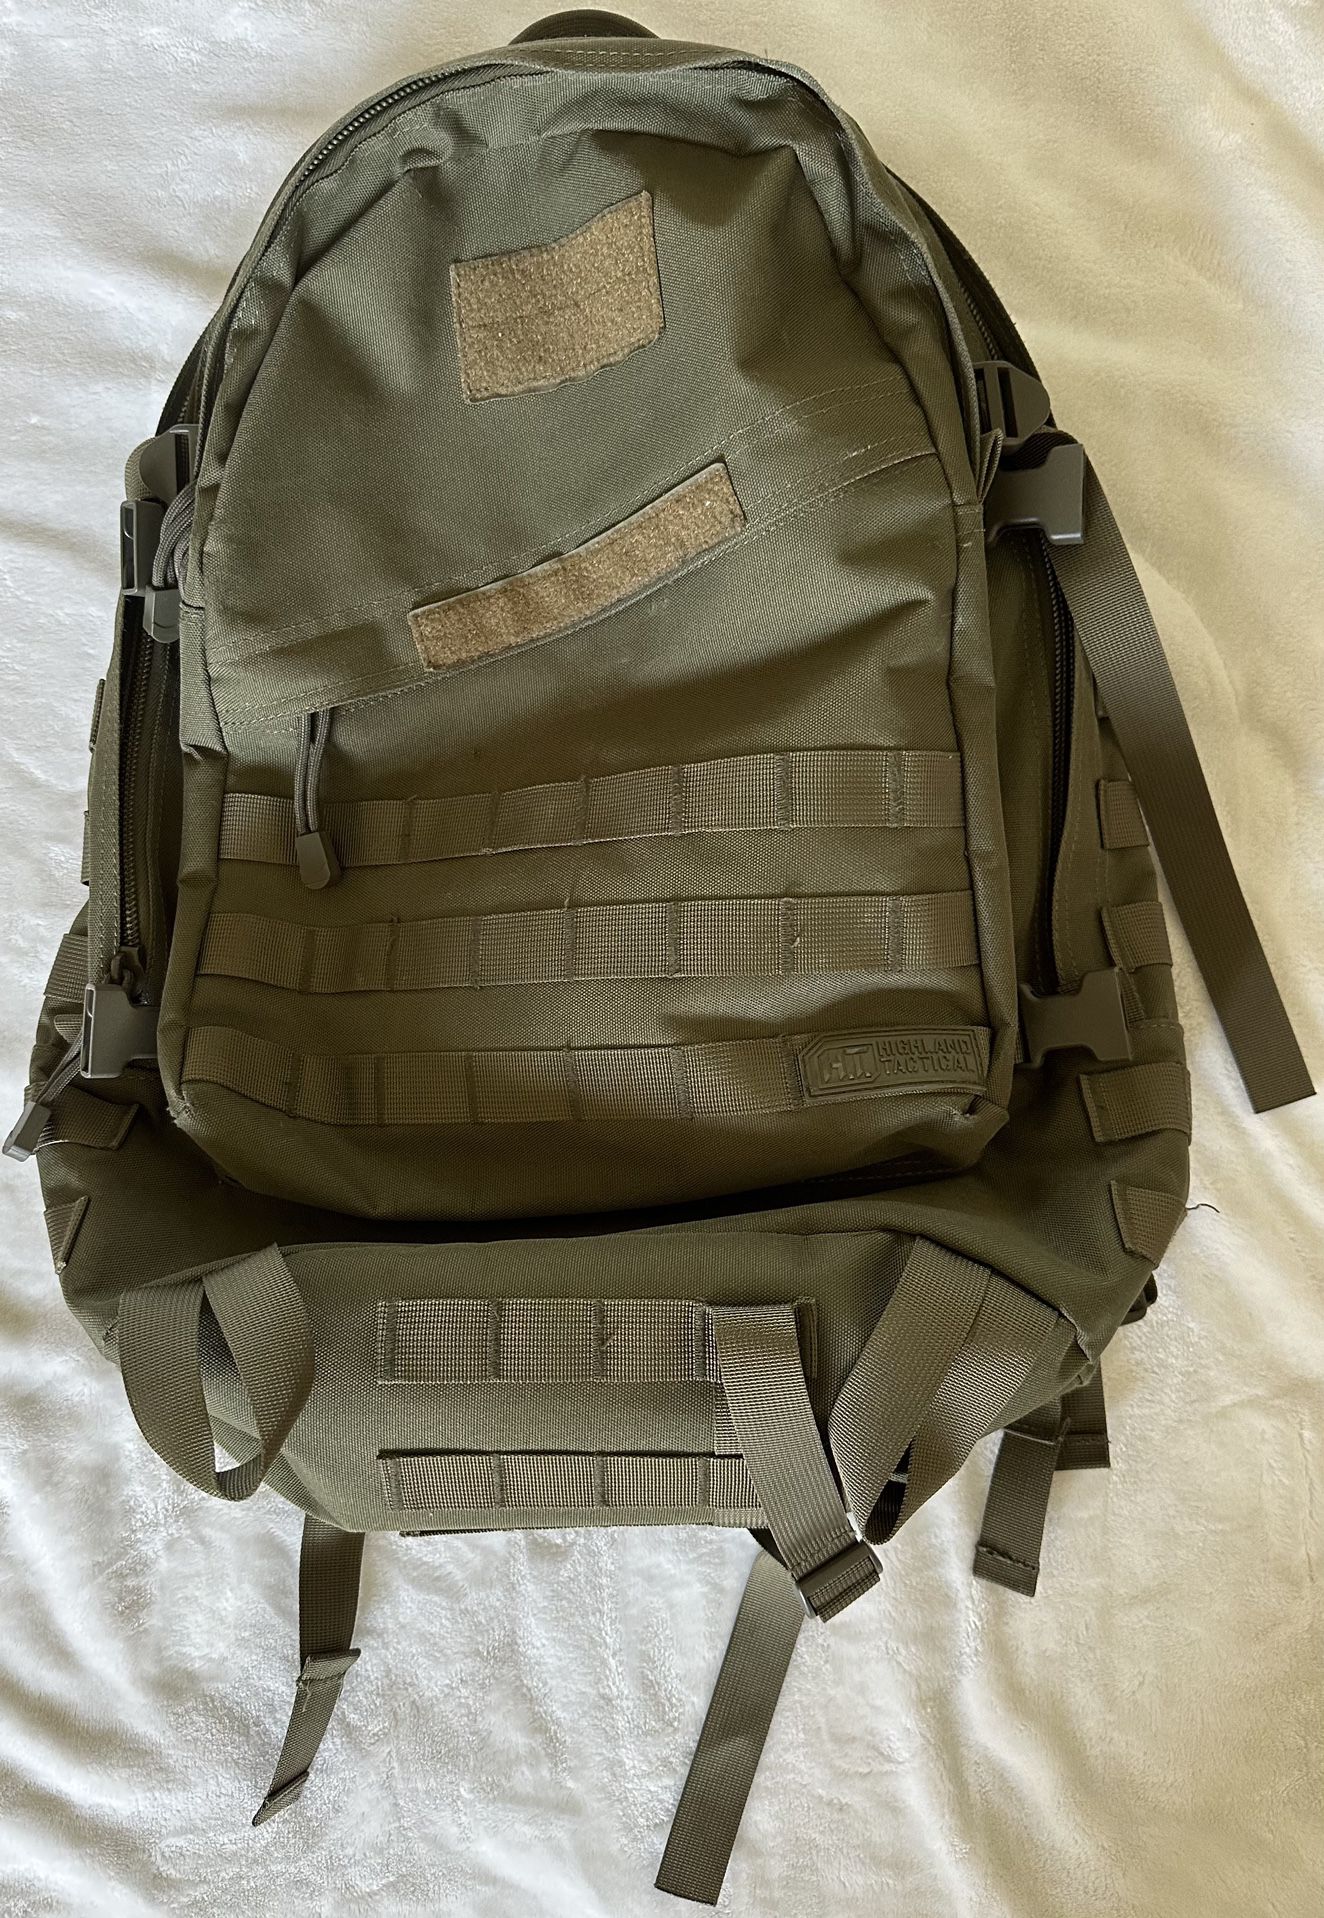 Highland tactical backpack